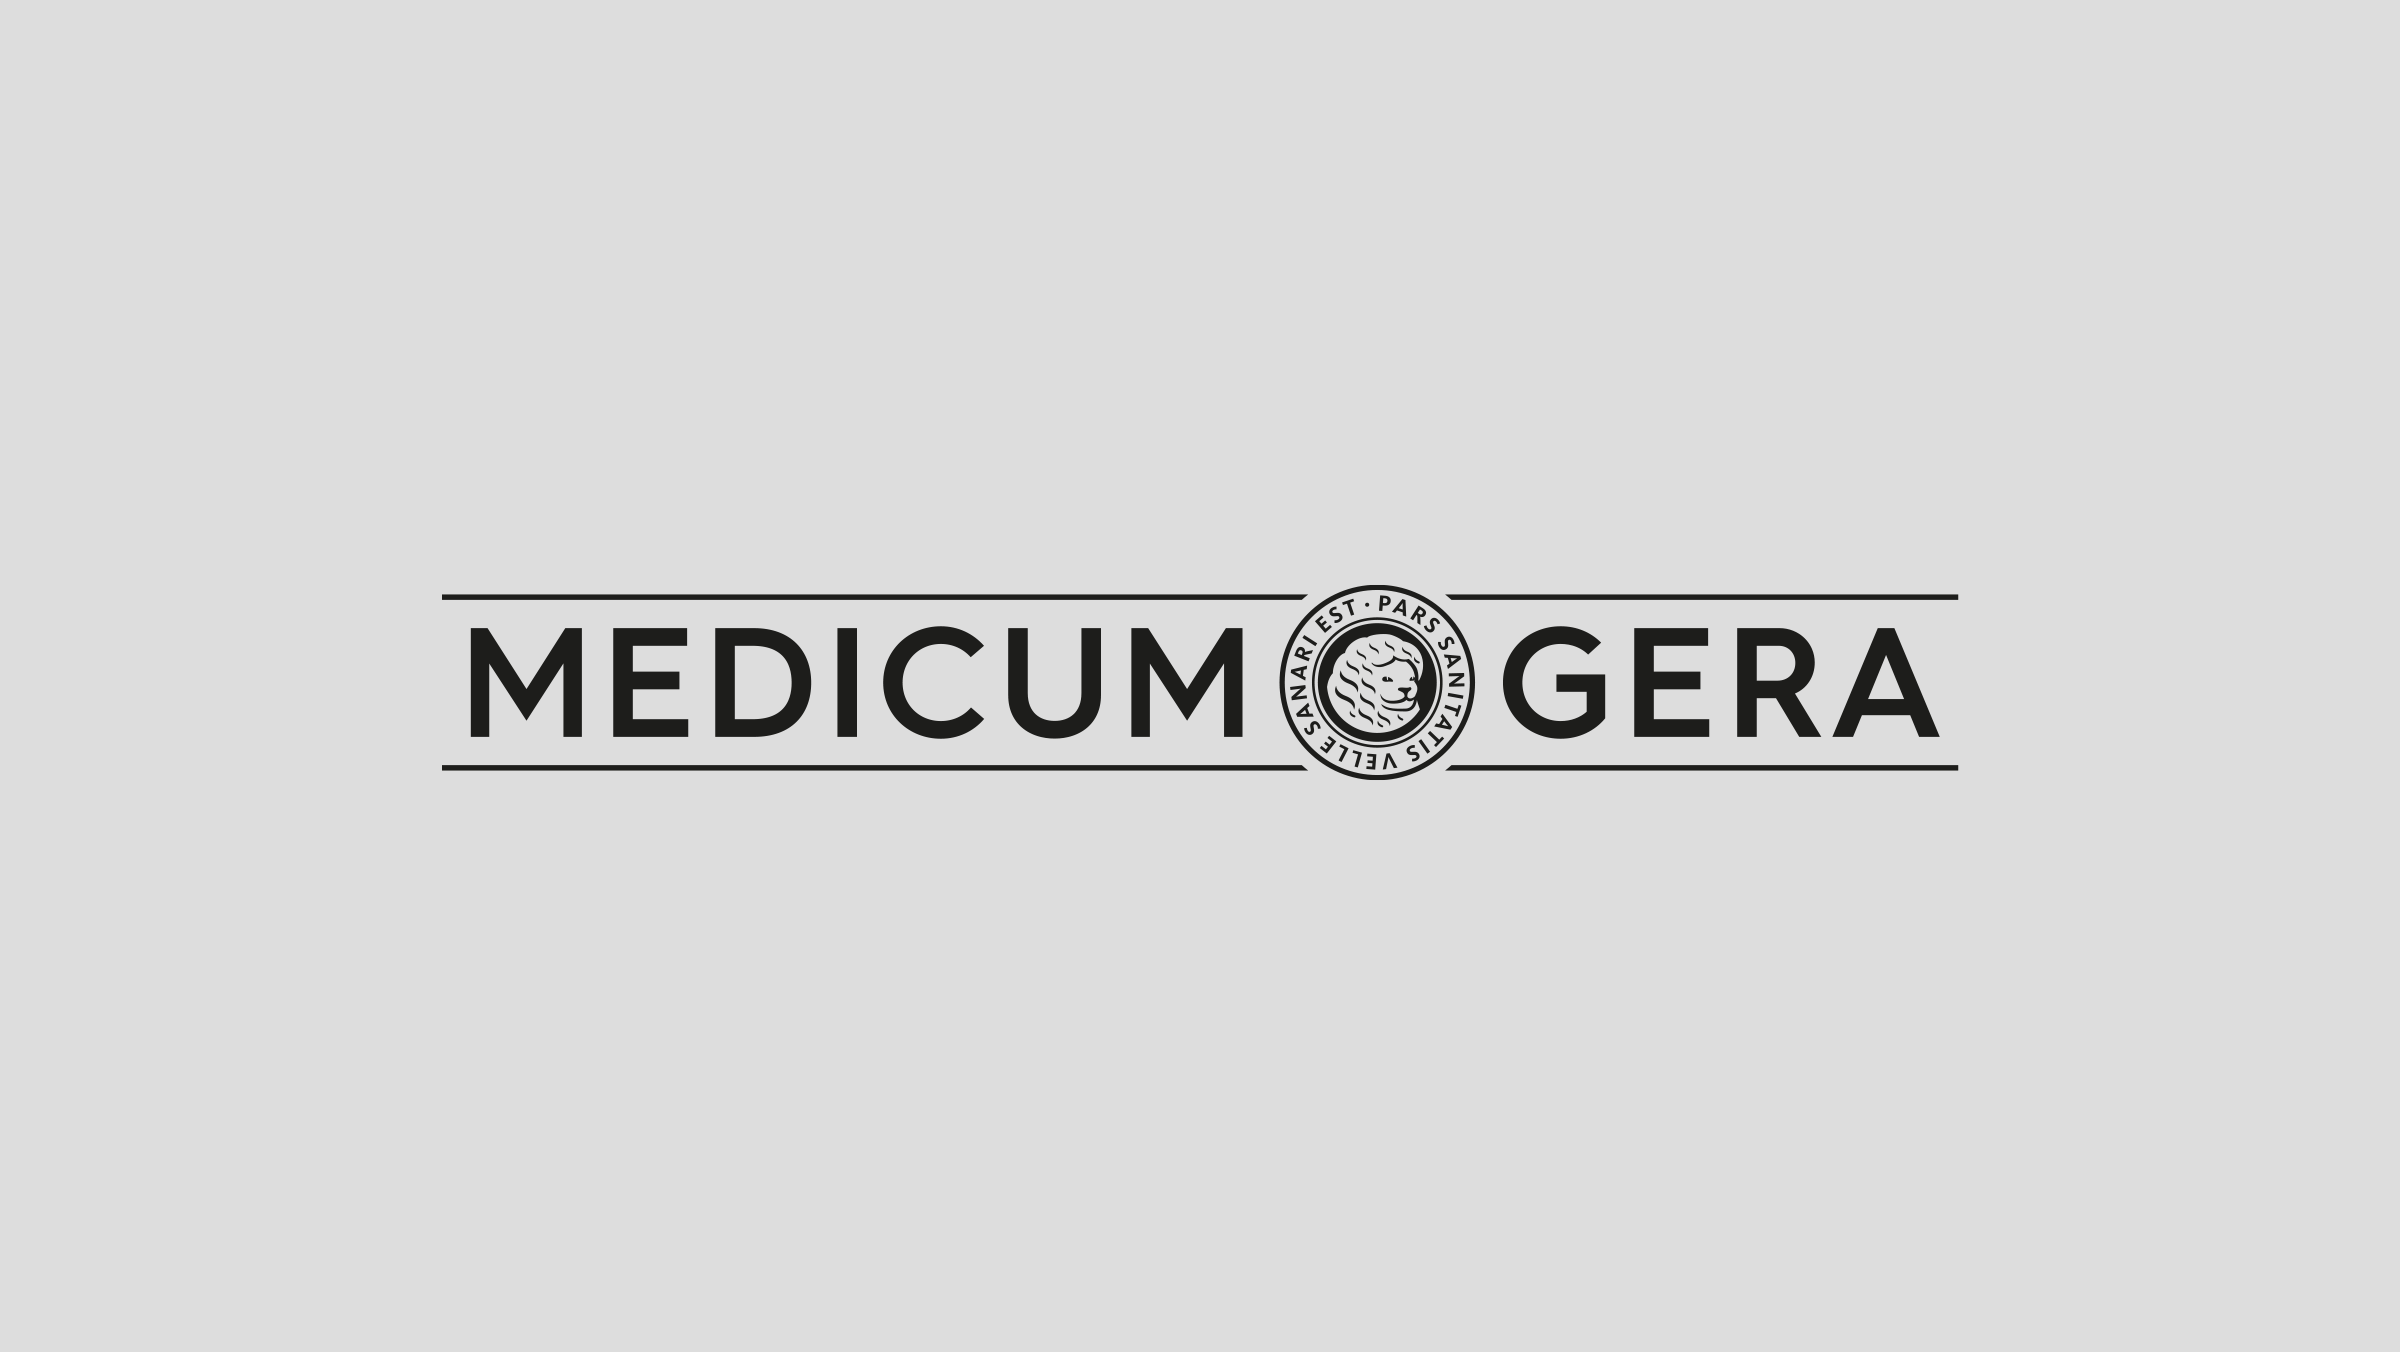 Logo Design Medicum gera